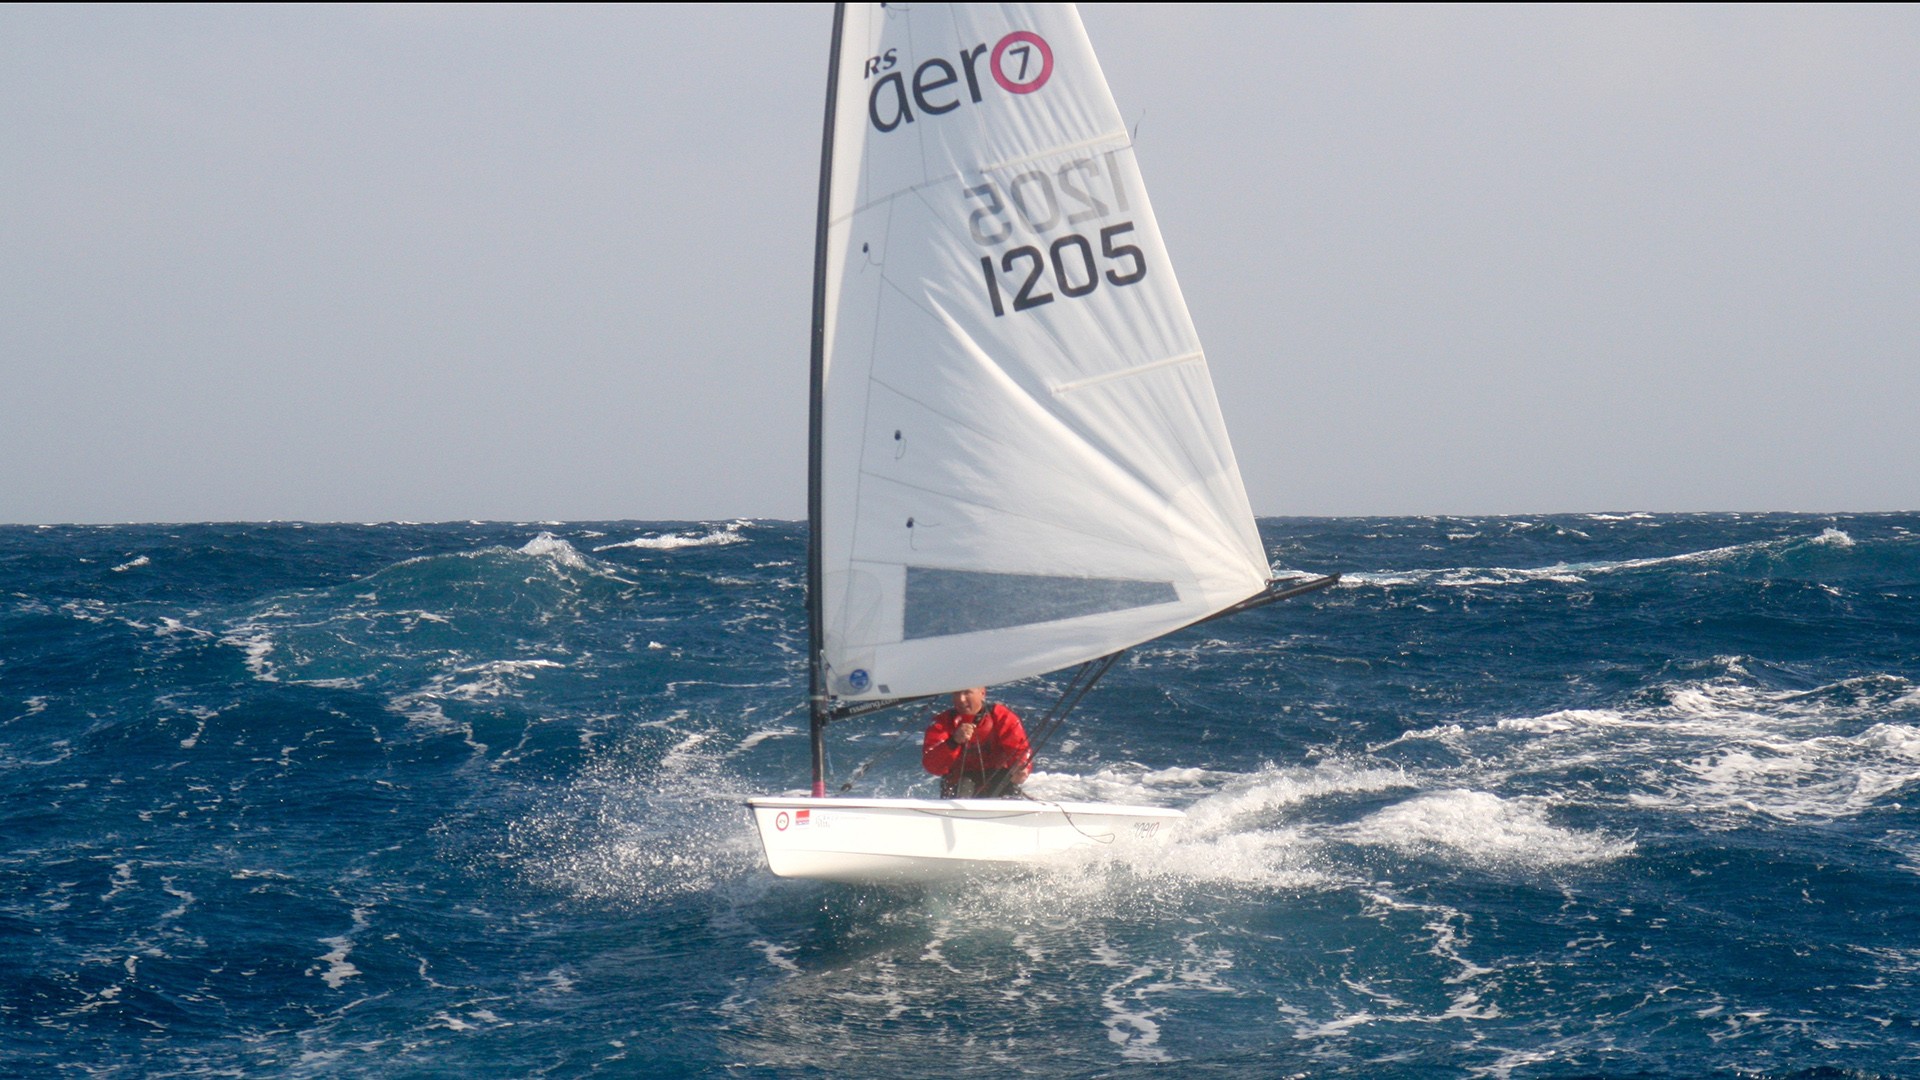 RS Aero - Racing Sailboats single hander with 3 rig size 